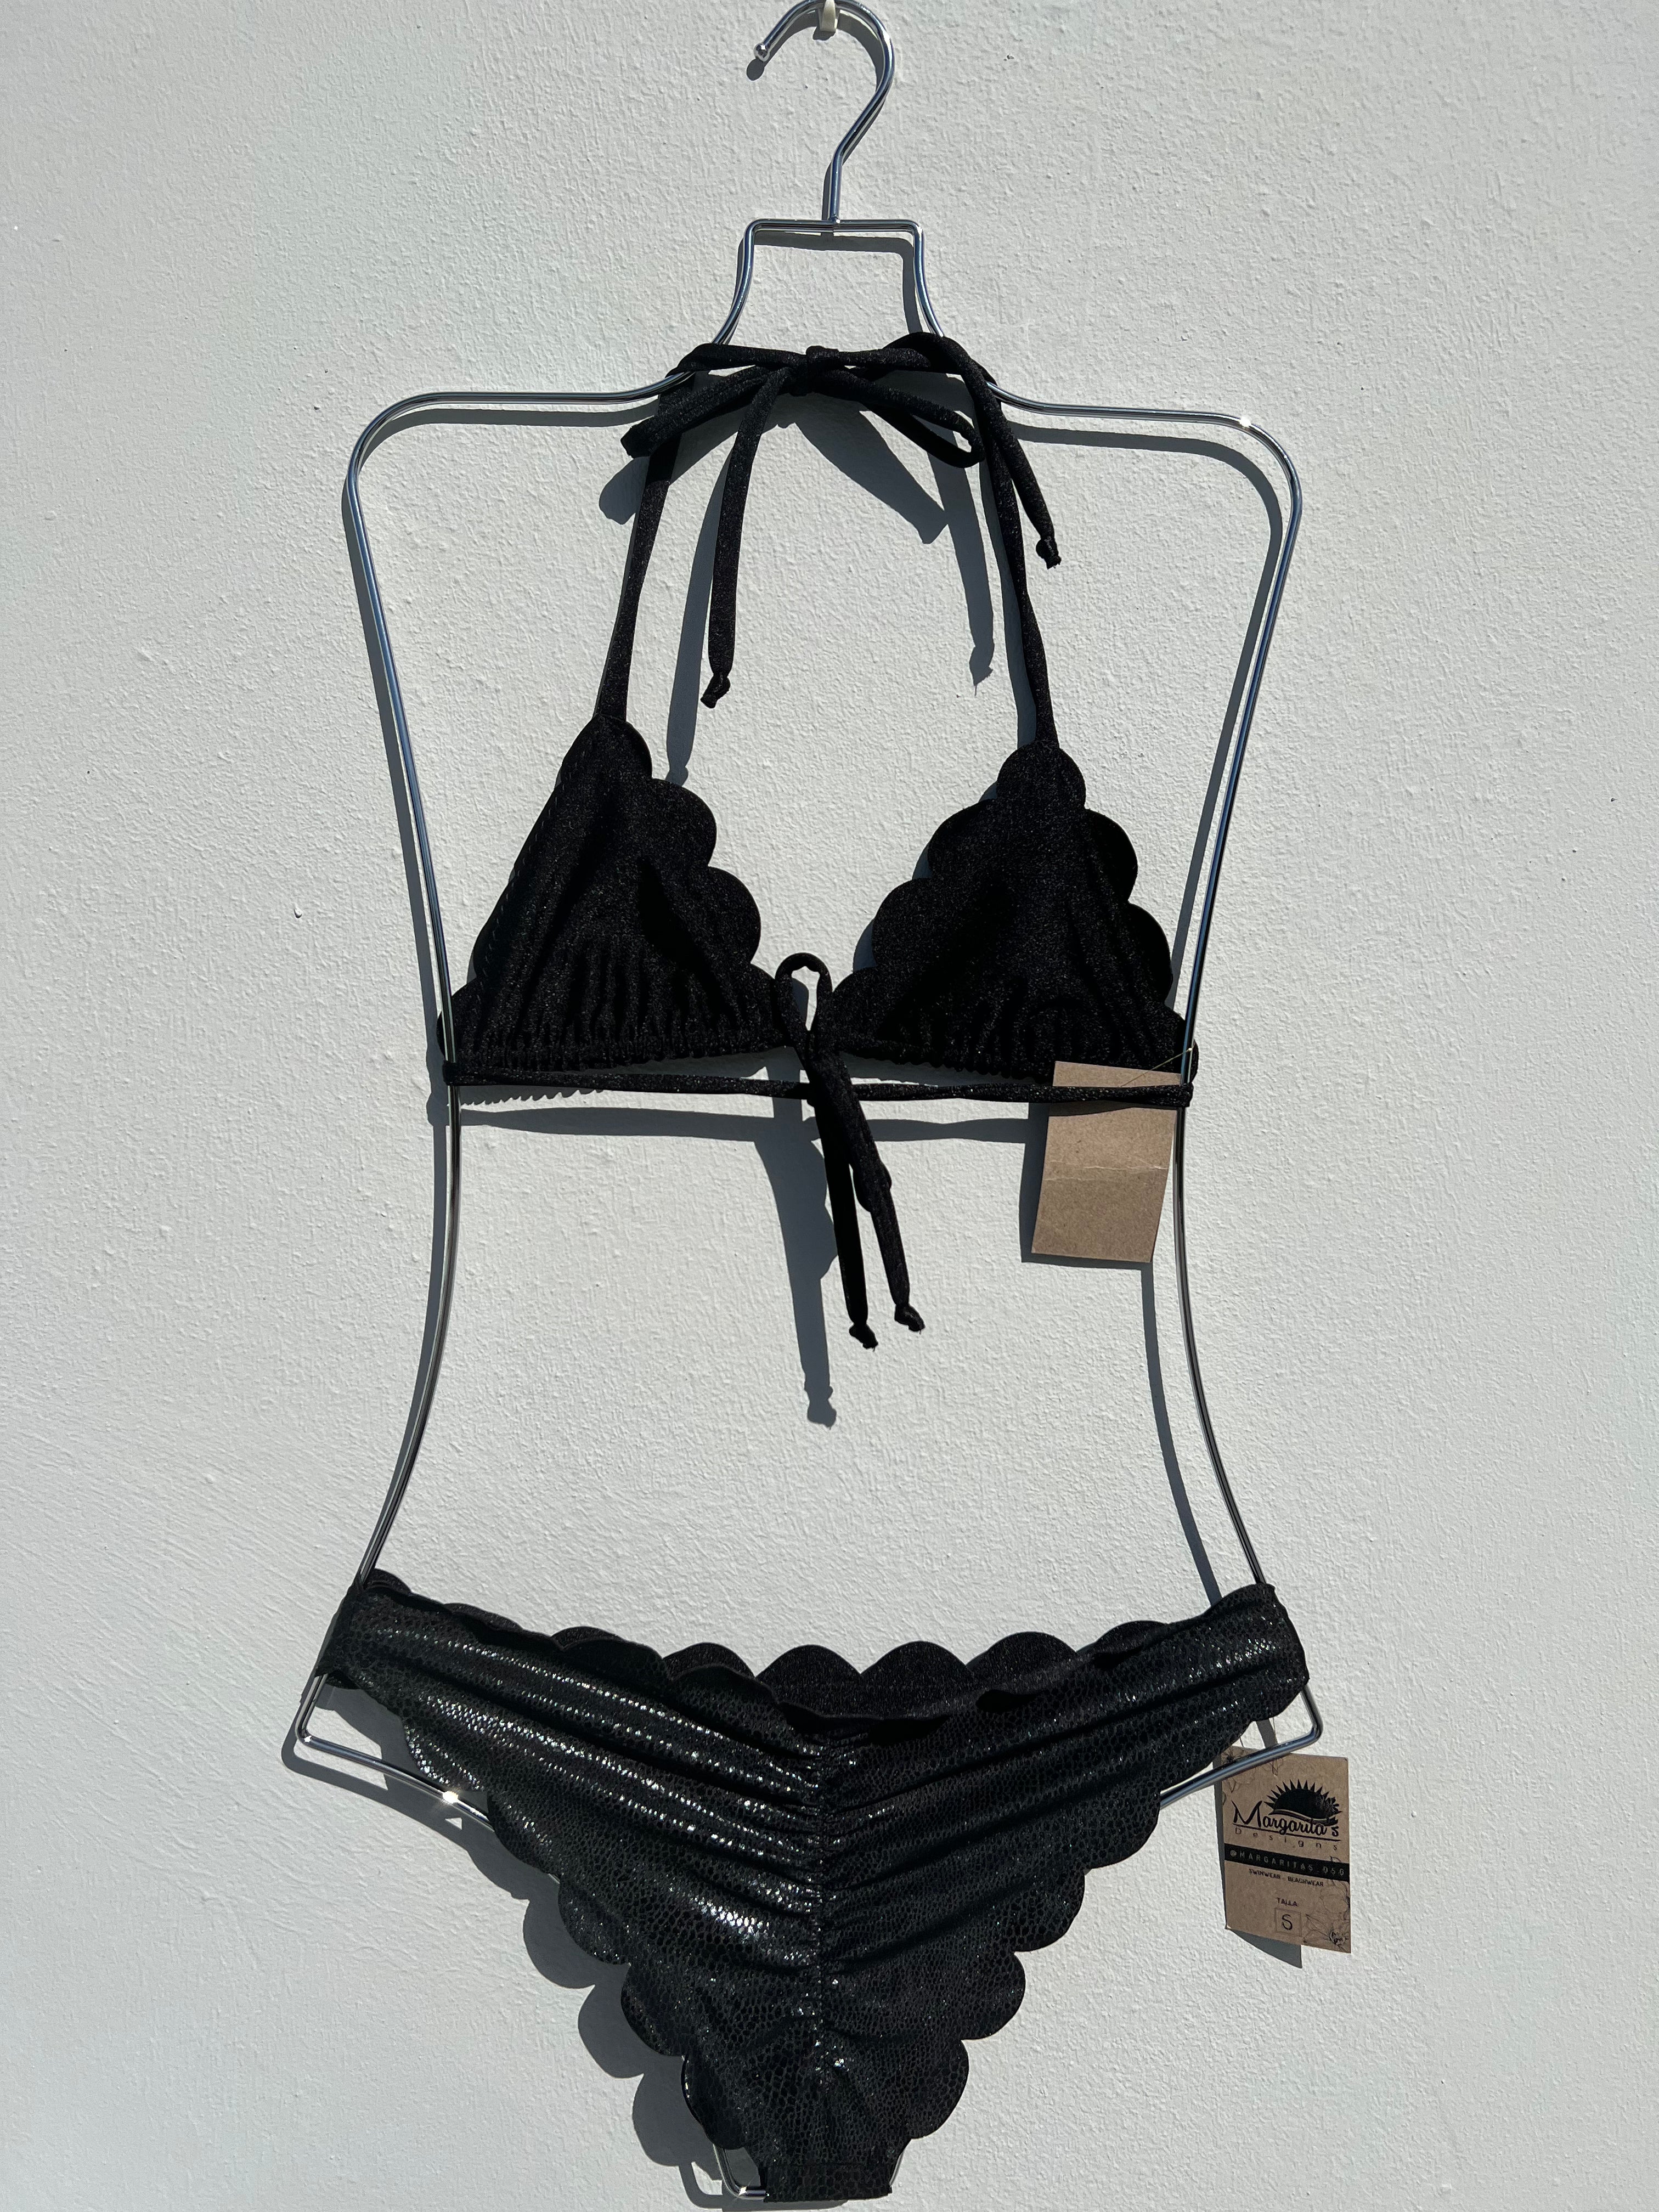 Leather lycra LASER CUT bikini set